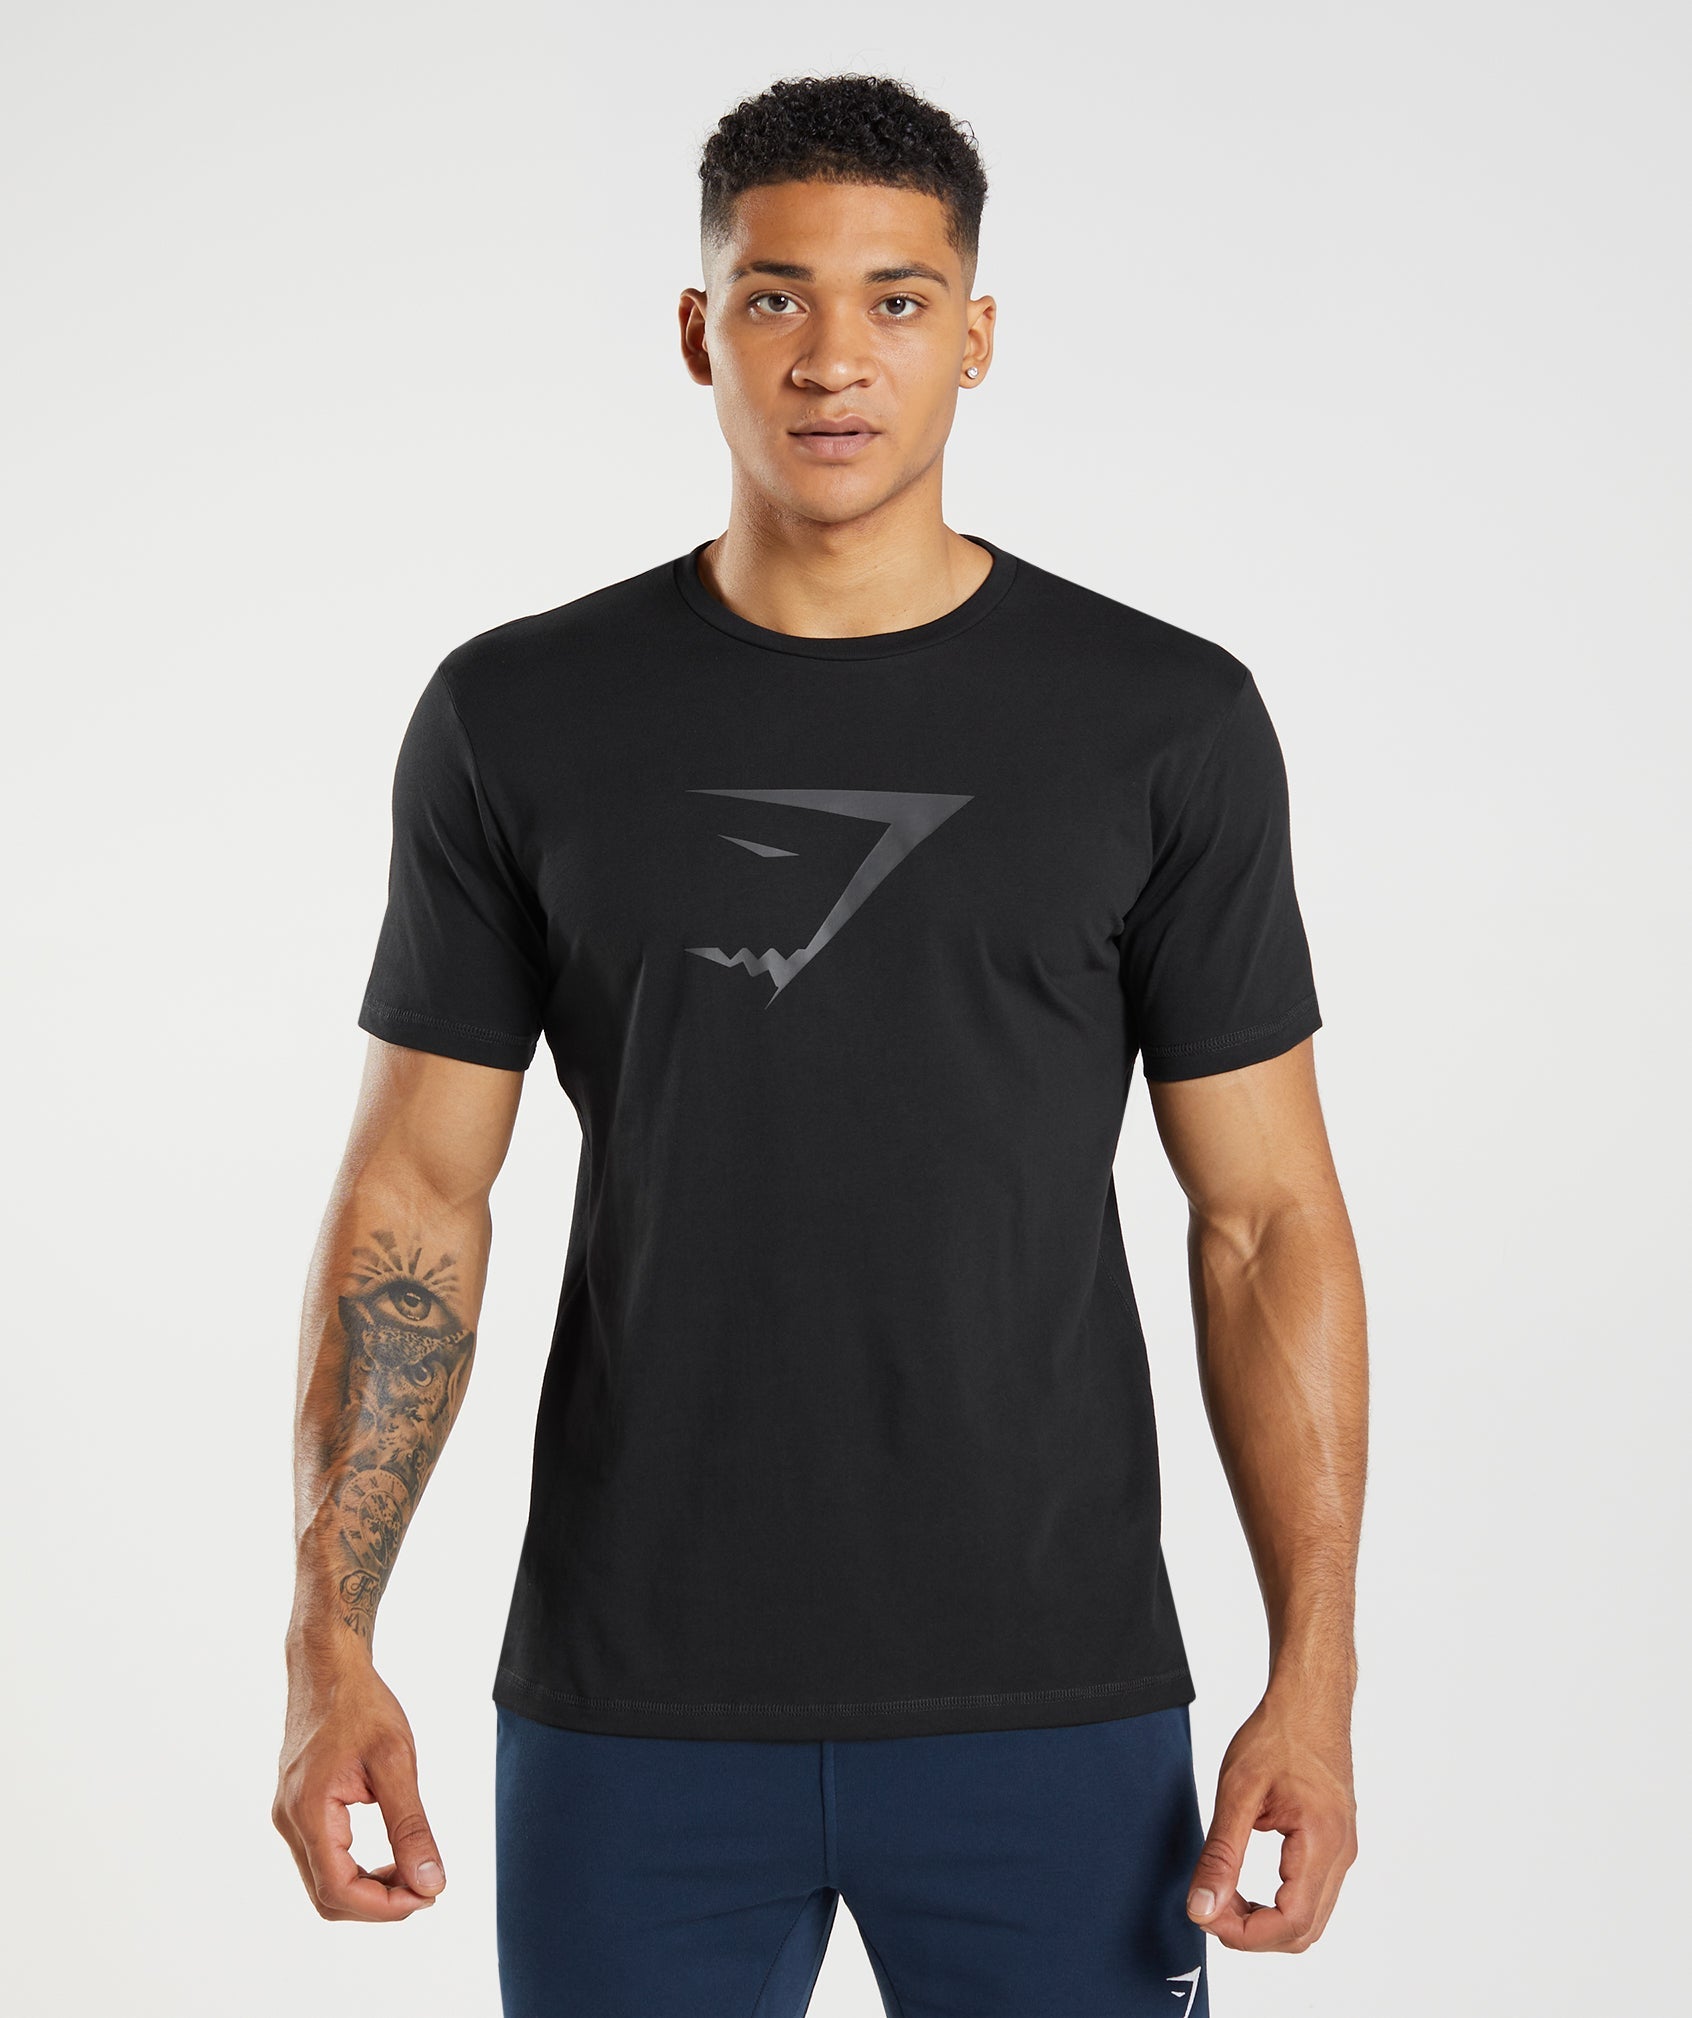 Gymshark T Shirt Mens Size L Gray Short Sleeve